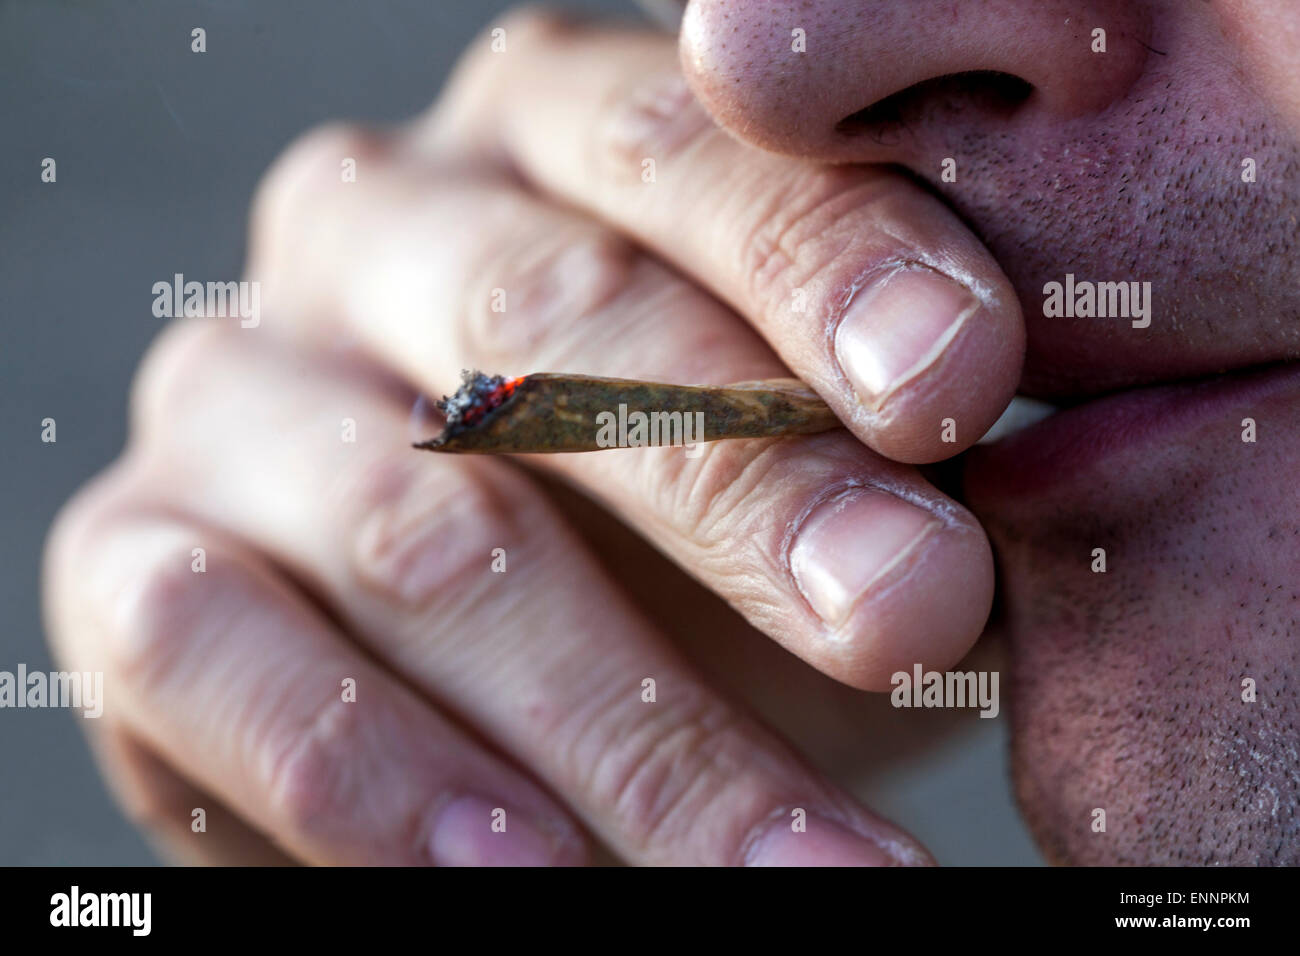 Nahaufnahme, Mann rauchen Marihuana-Joints Stockfoto